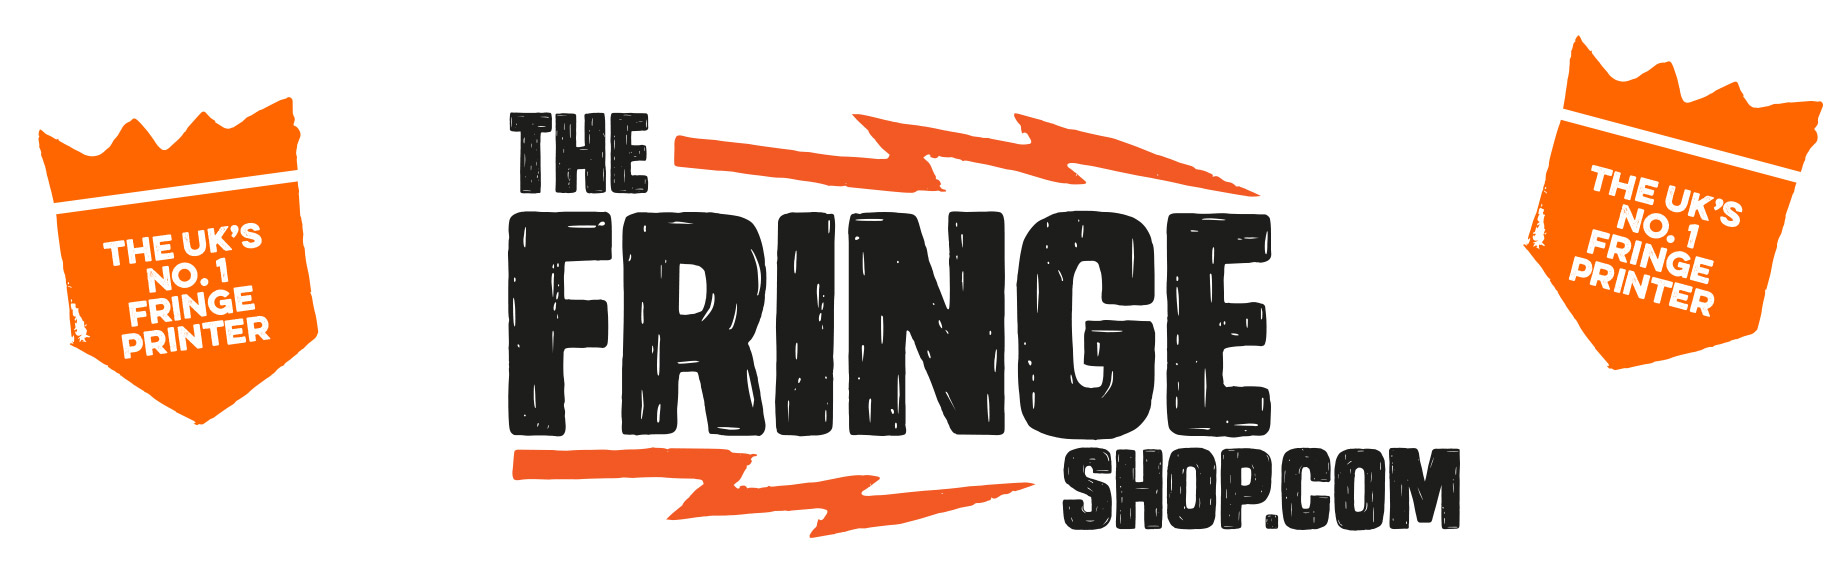 The Fringe Shop.com / Flyers / Posters / Stickers / Edinburgh Fringe Printing